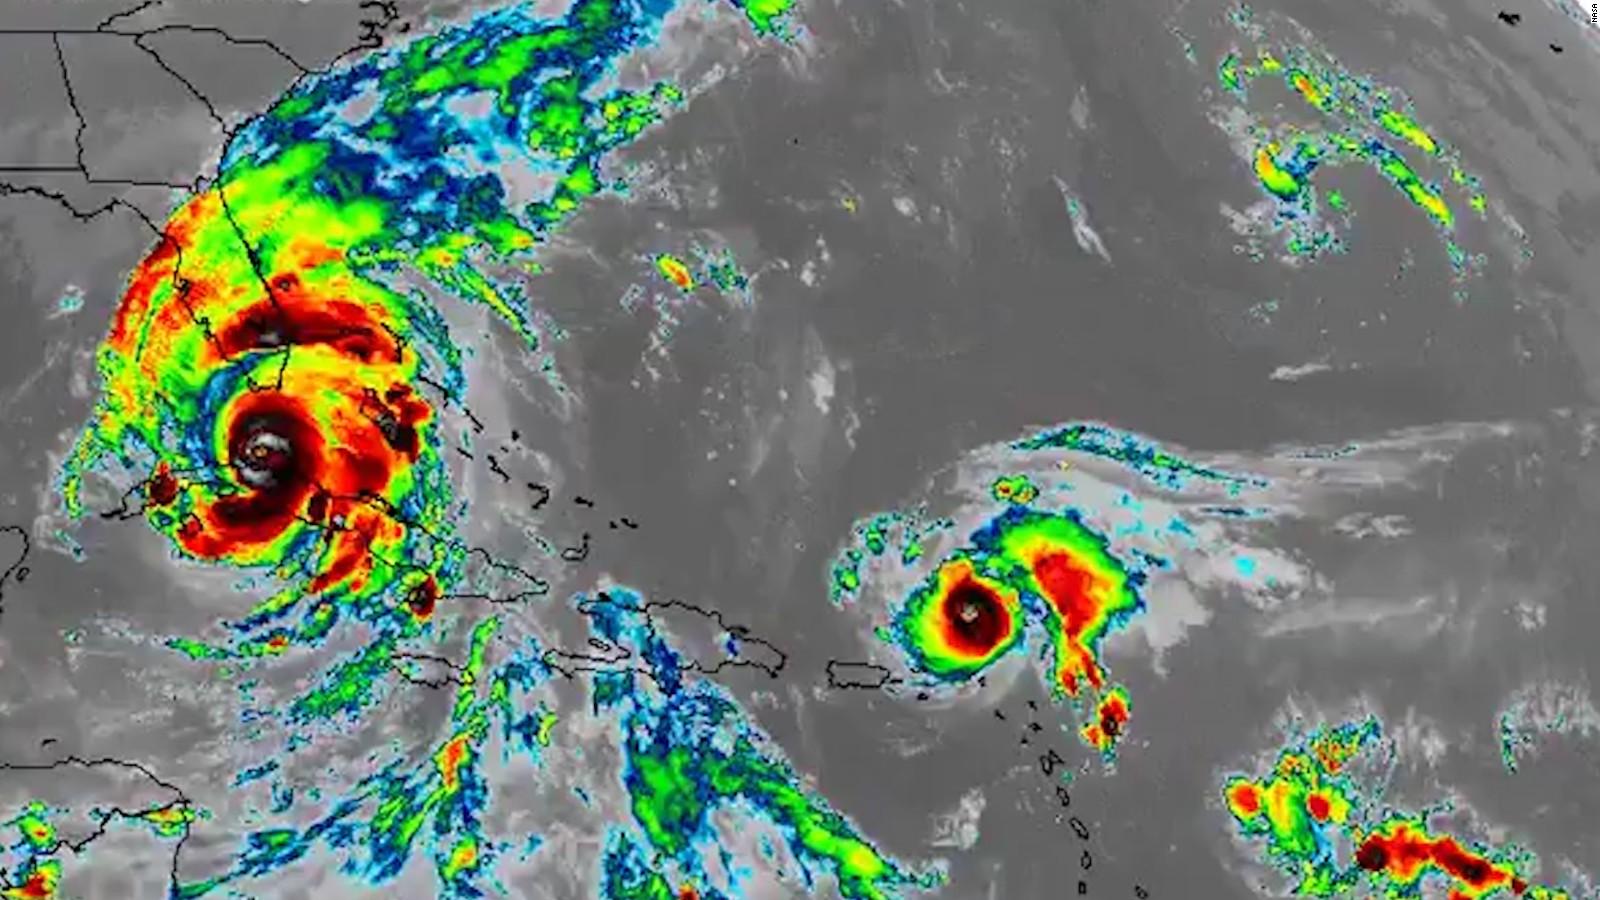 Hurricane Irma Cnn